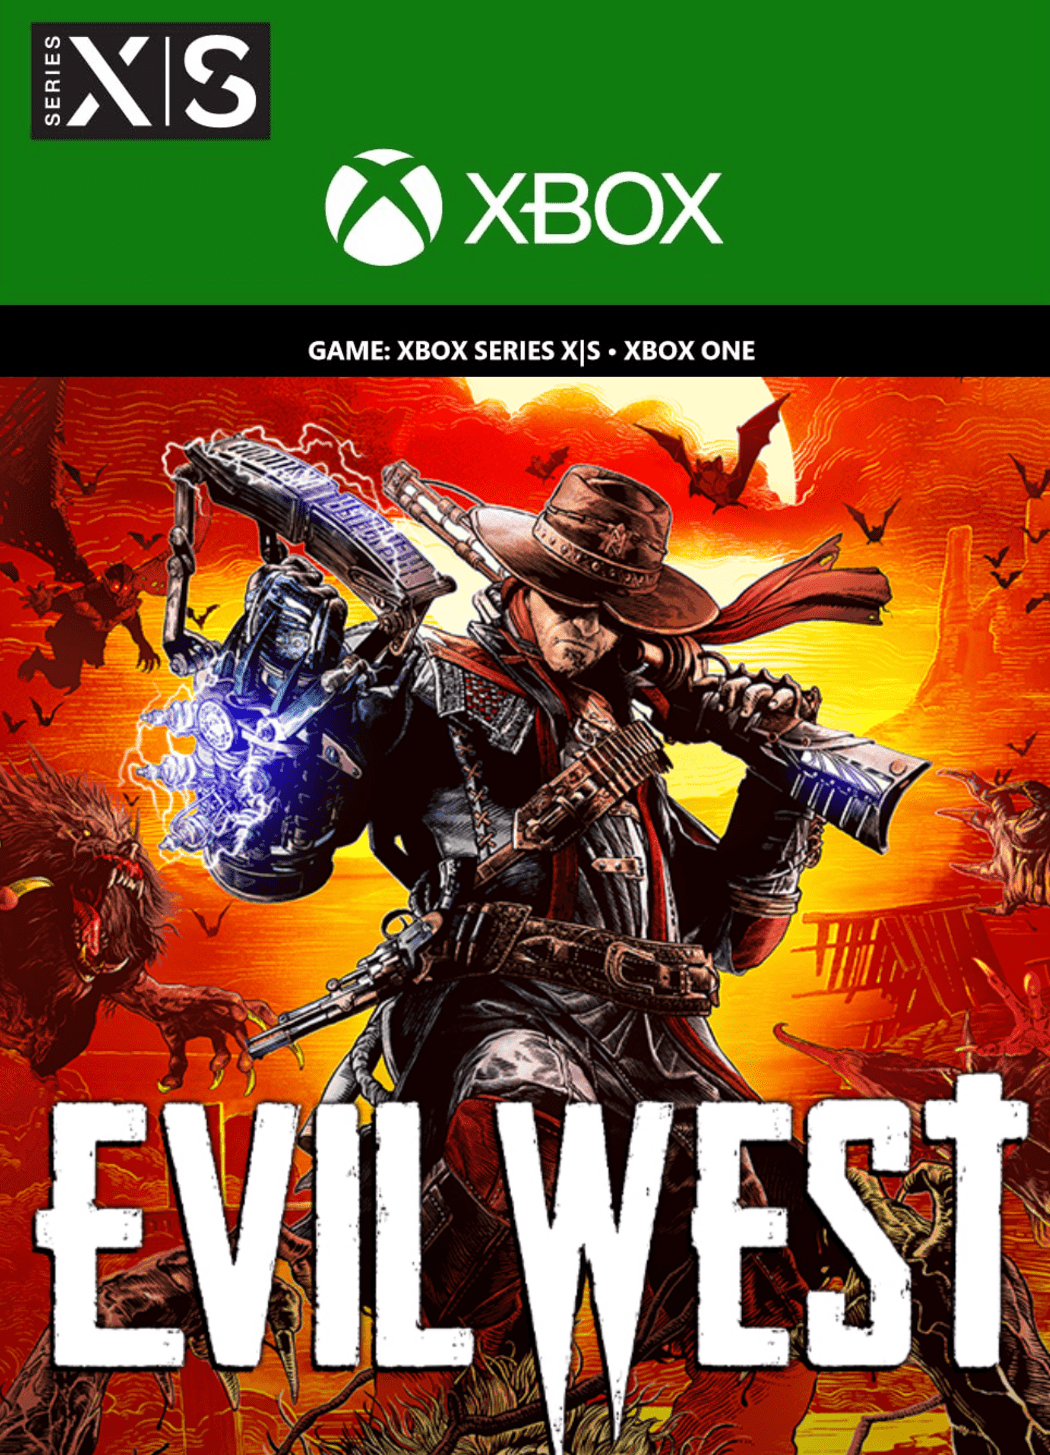 Evil West (Xbox Series X) - Review